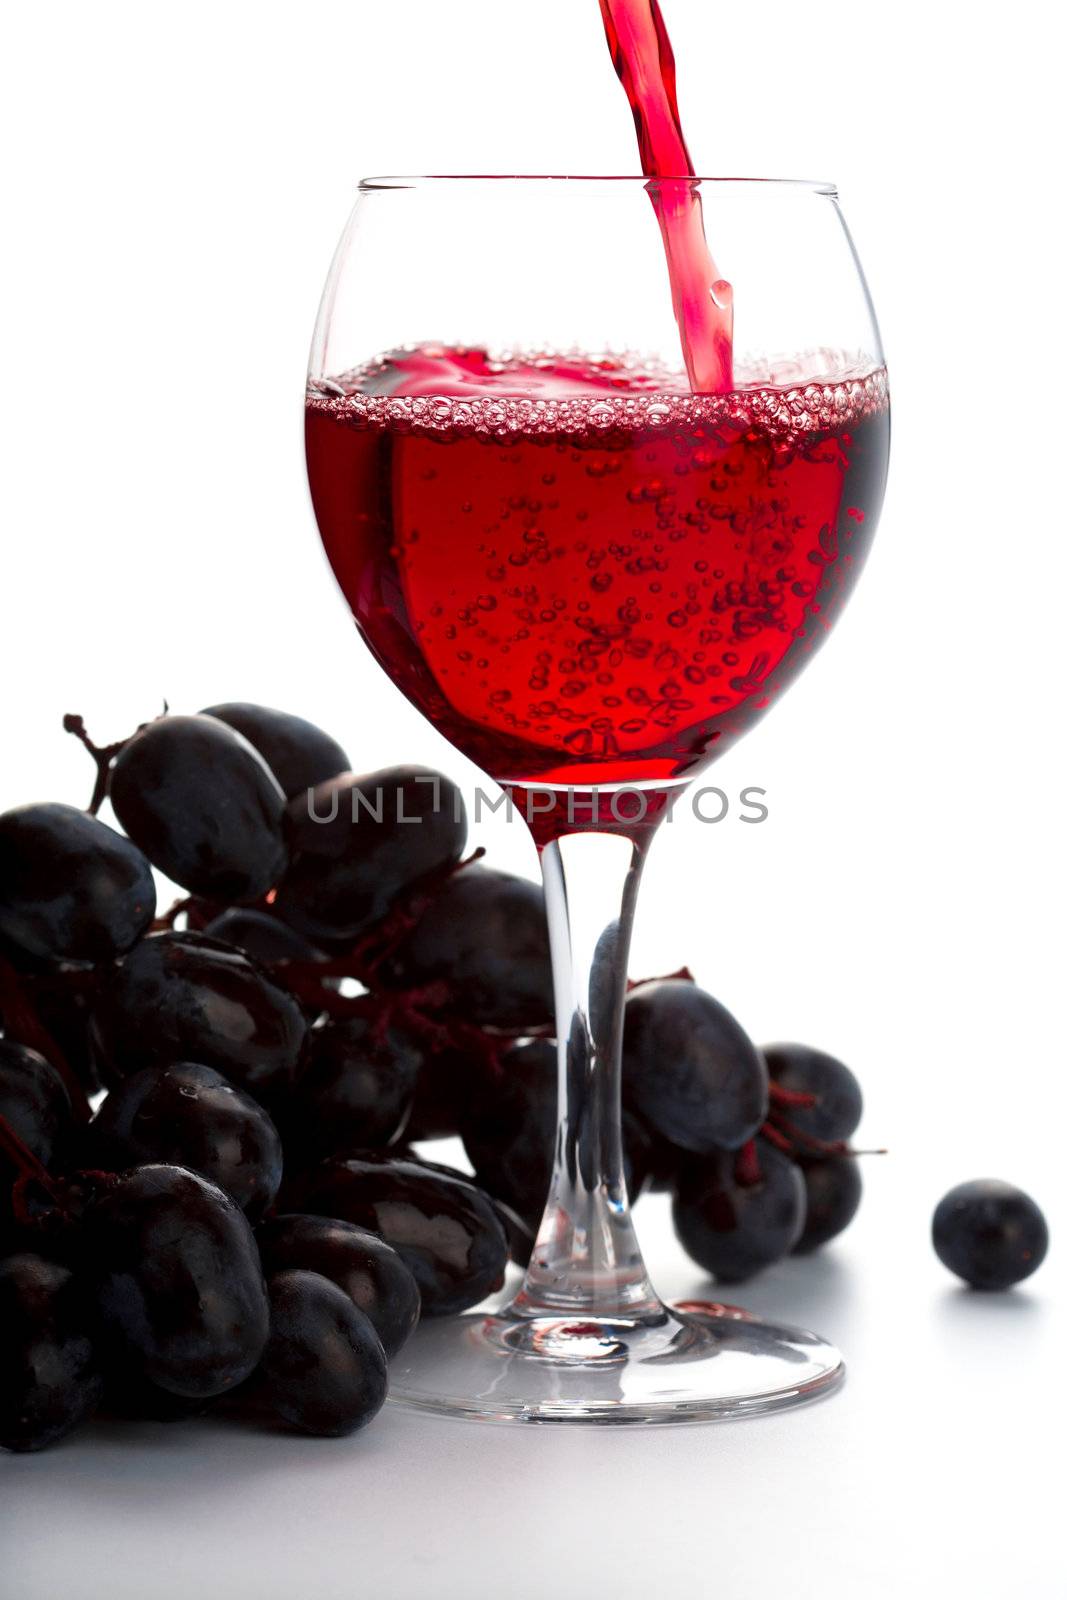 red wine by mereutaandrei